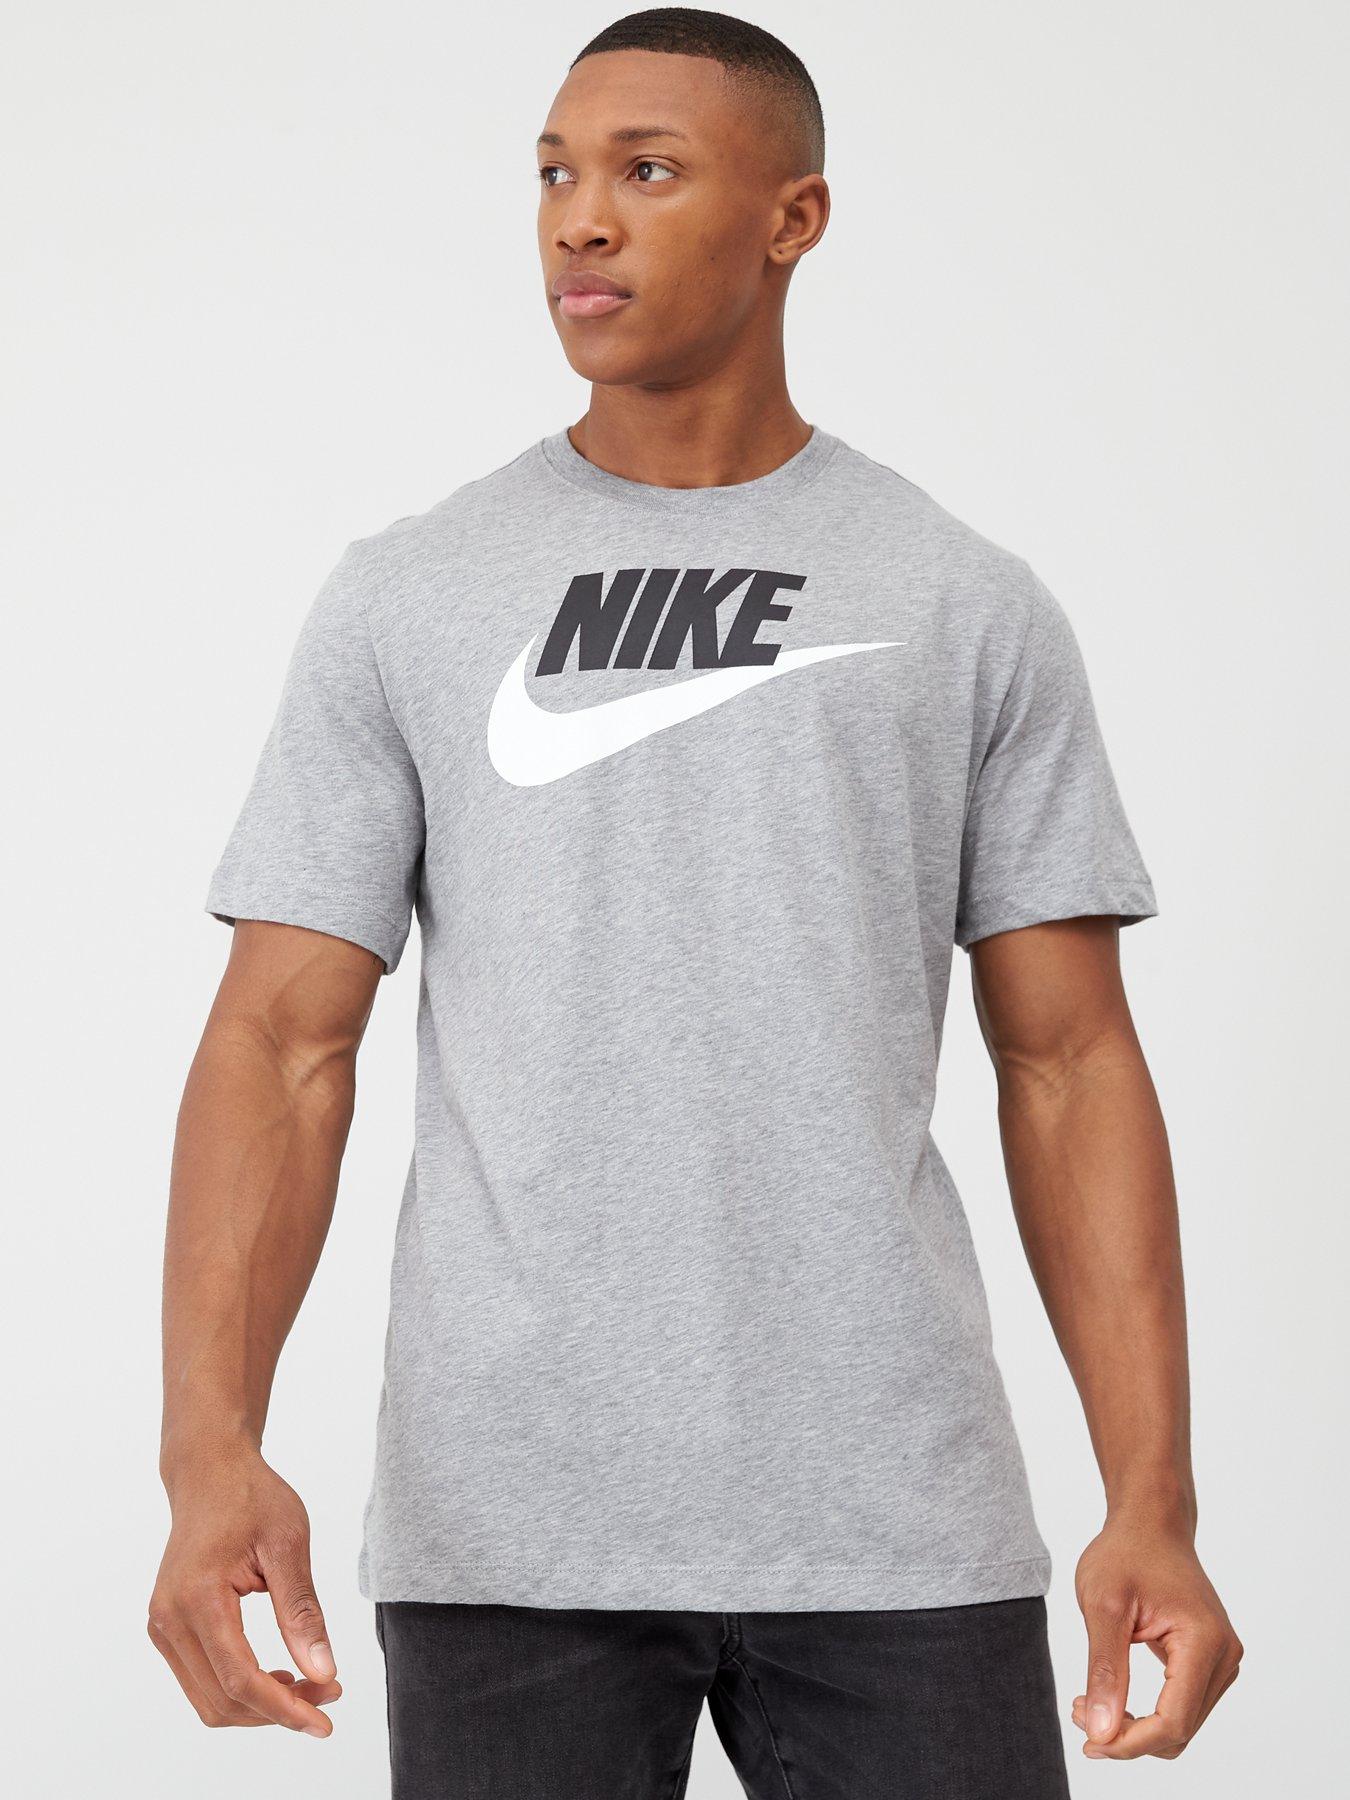 Nike Futura T-Shirt - Grey/Black/White | very.co.uk